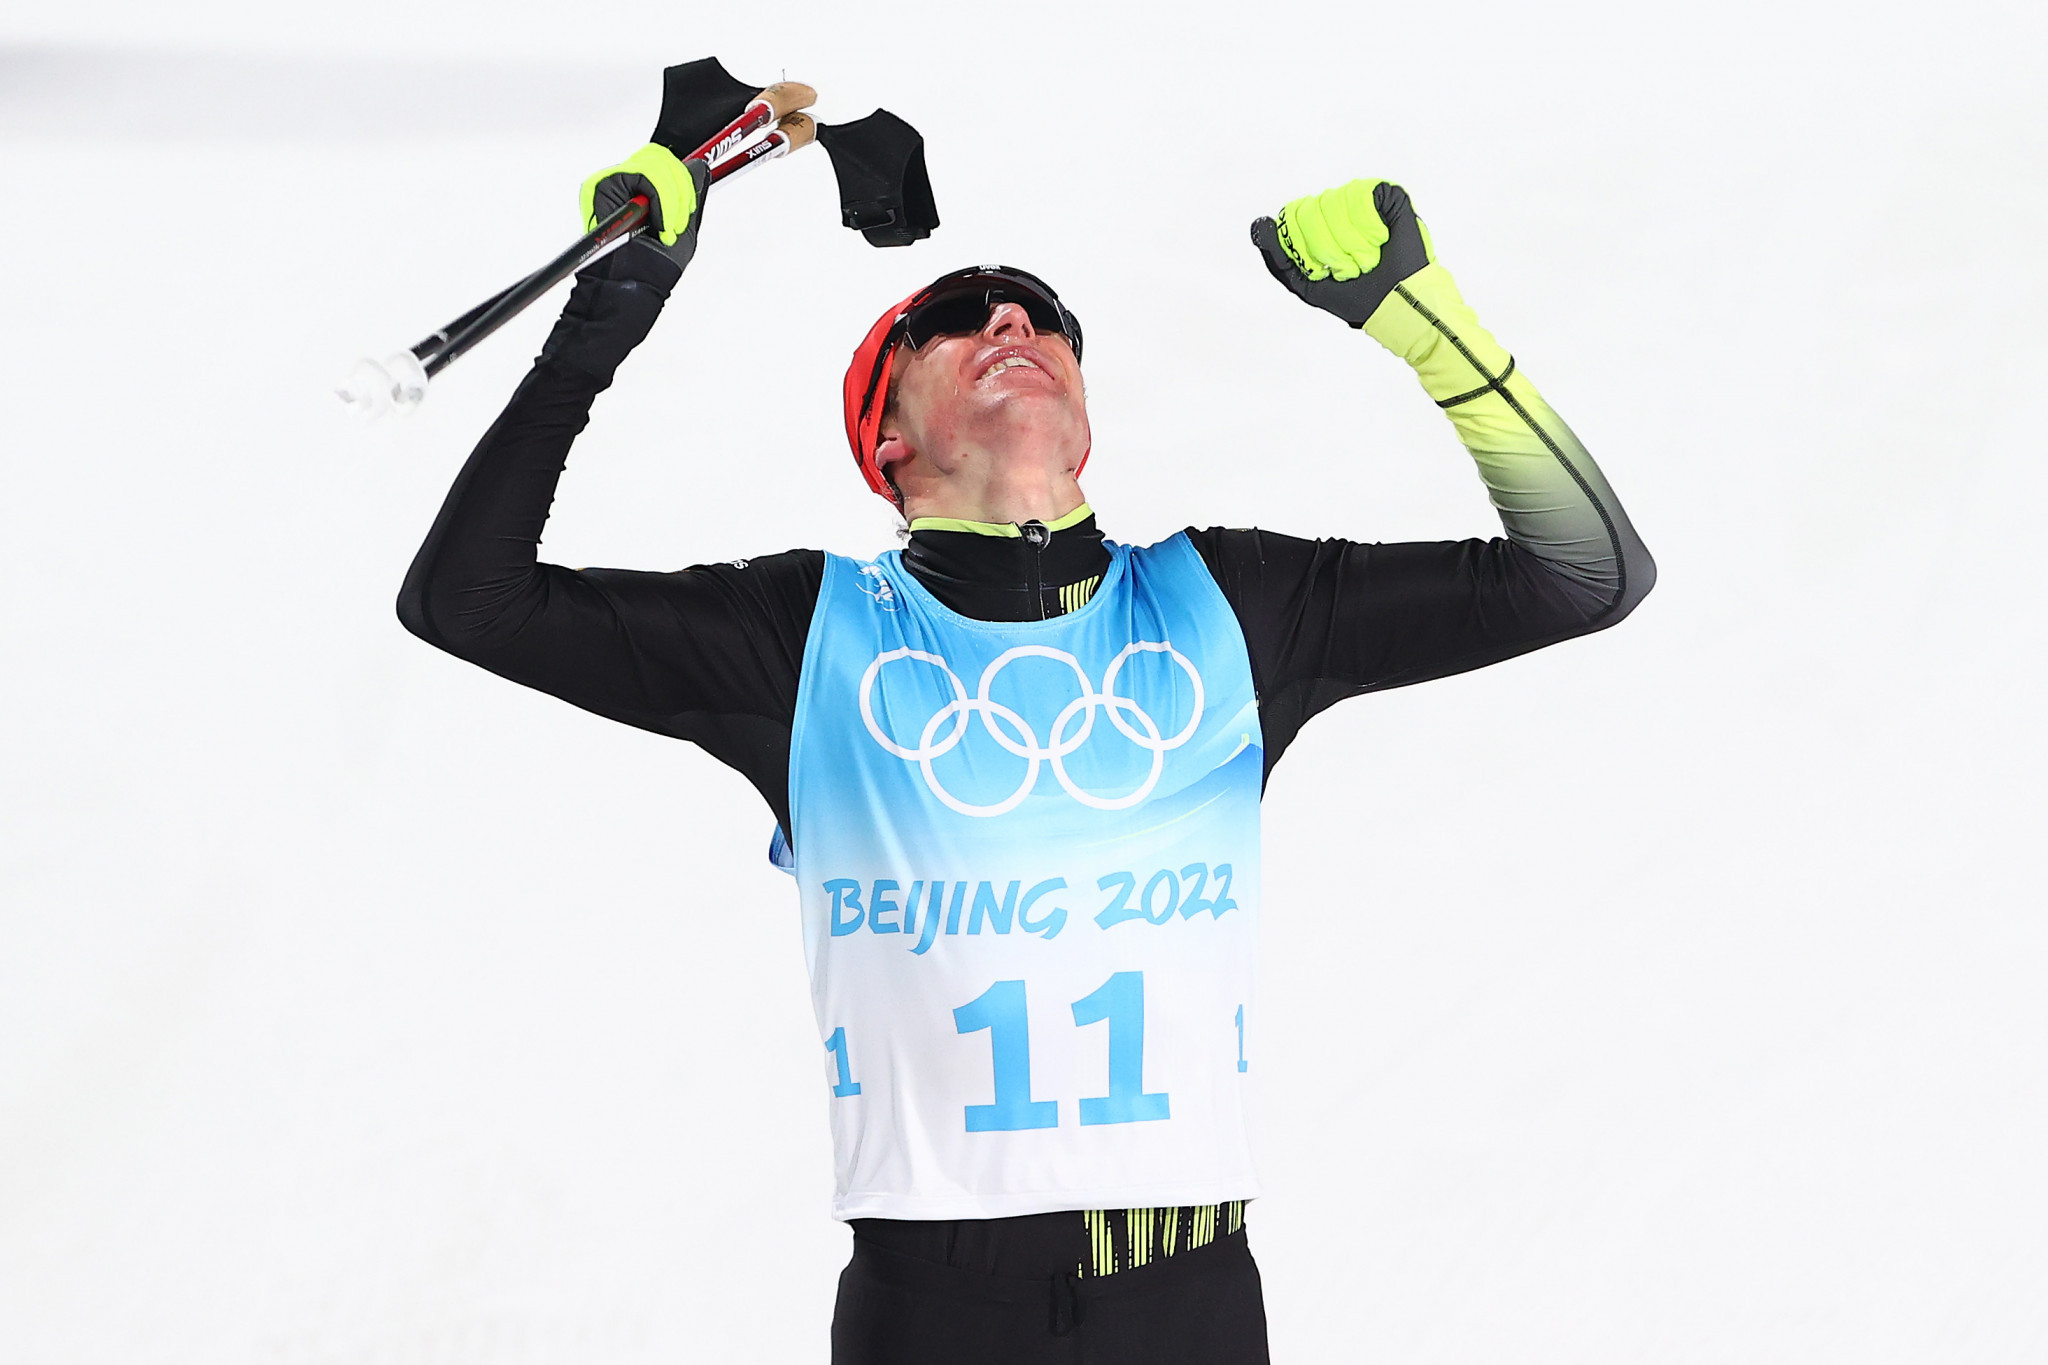 Vinzenz Geiger won the opening Nordic combined event of Beijing 2022 ©Getty Images